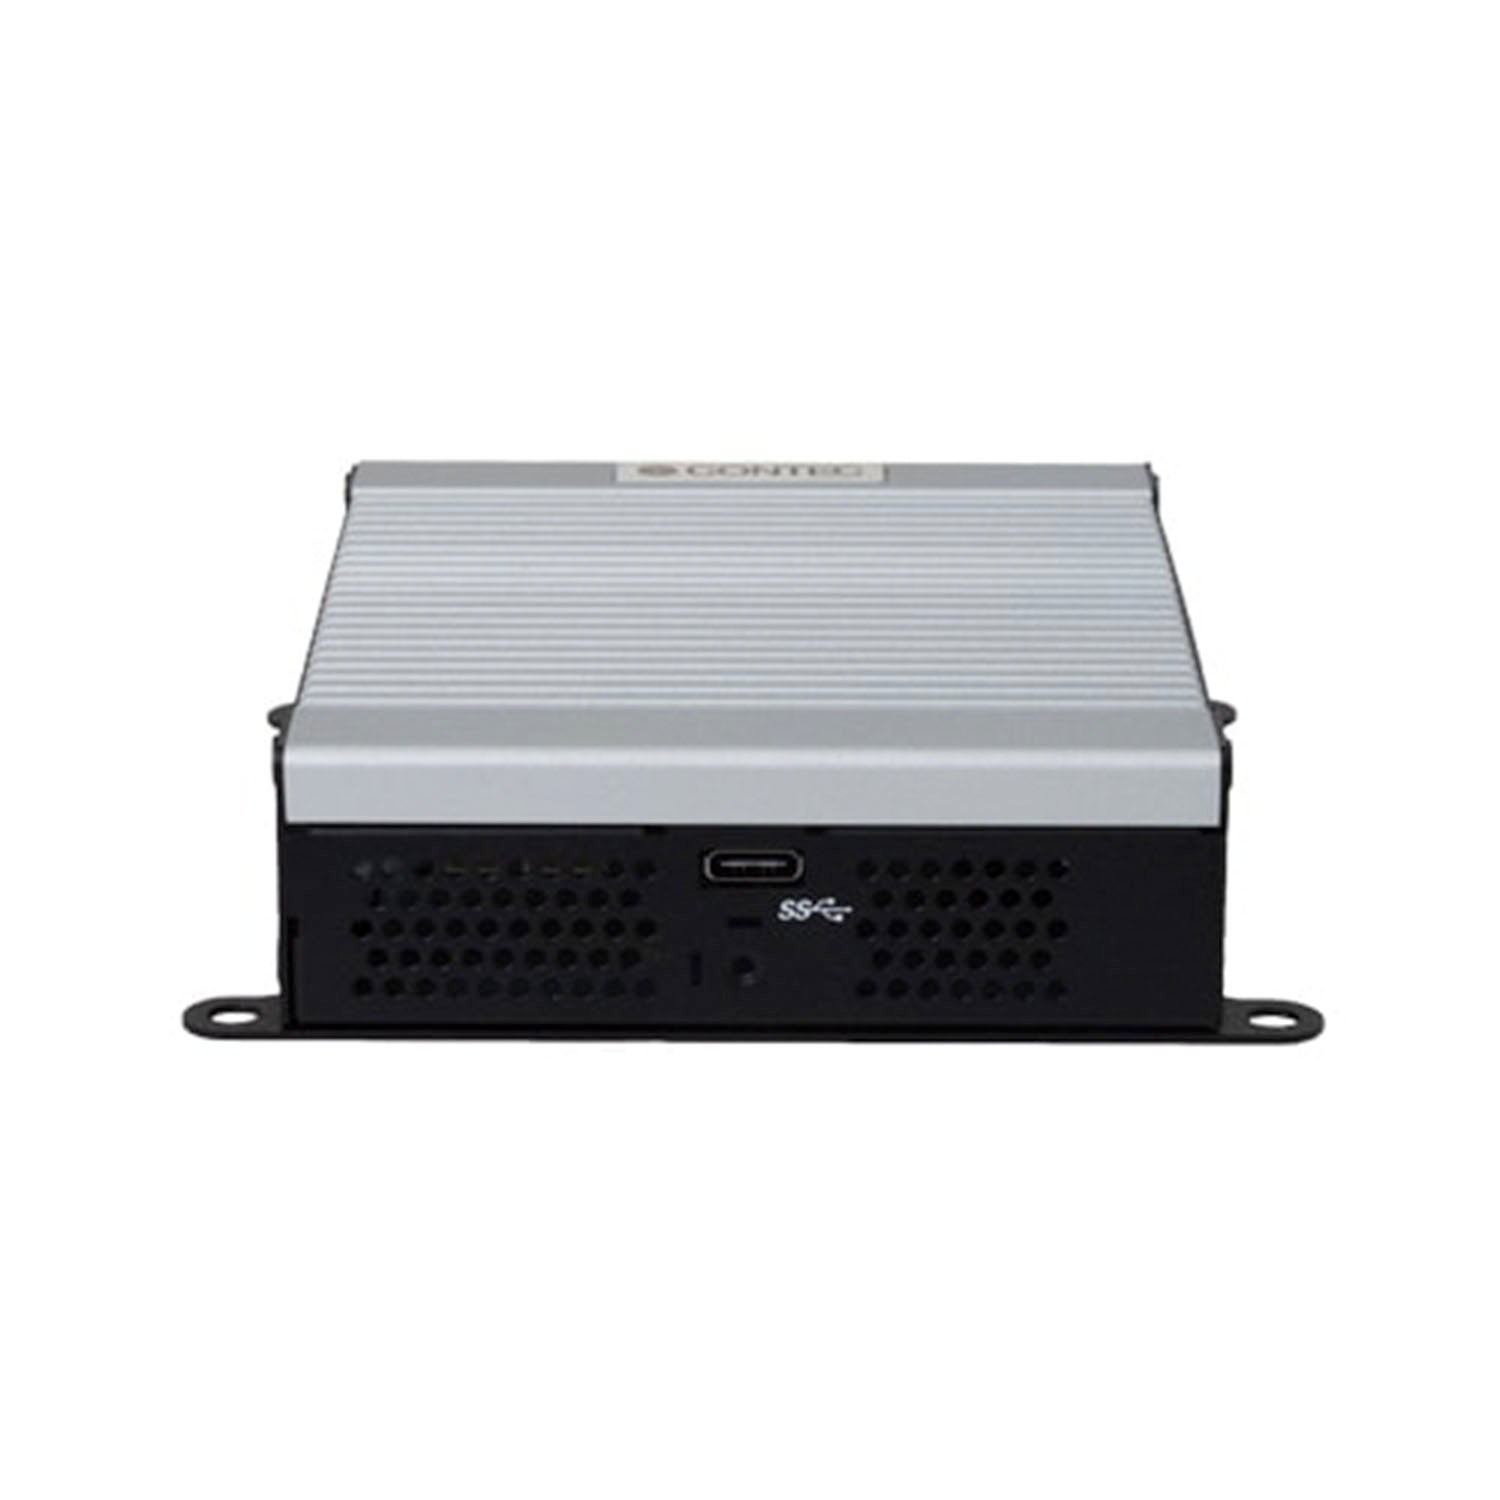 BX-U200 - Fanless Embedded PC / Ultra small design / Atom x5-E3940